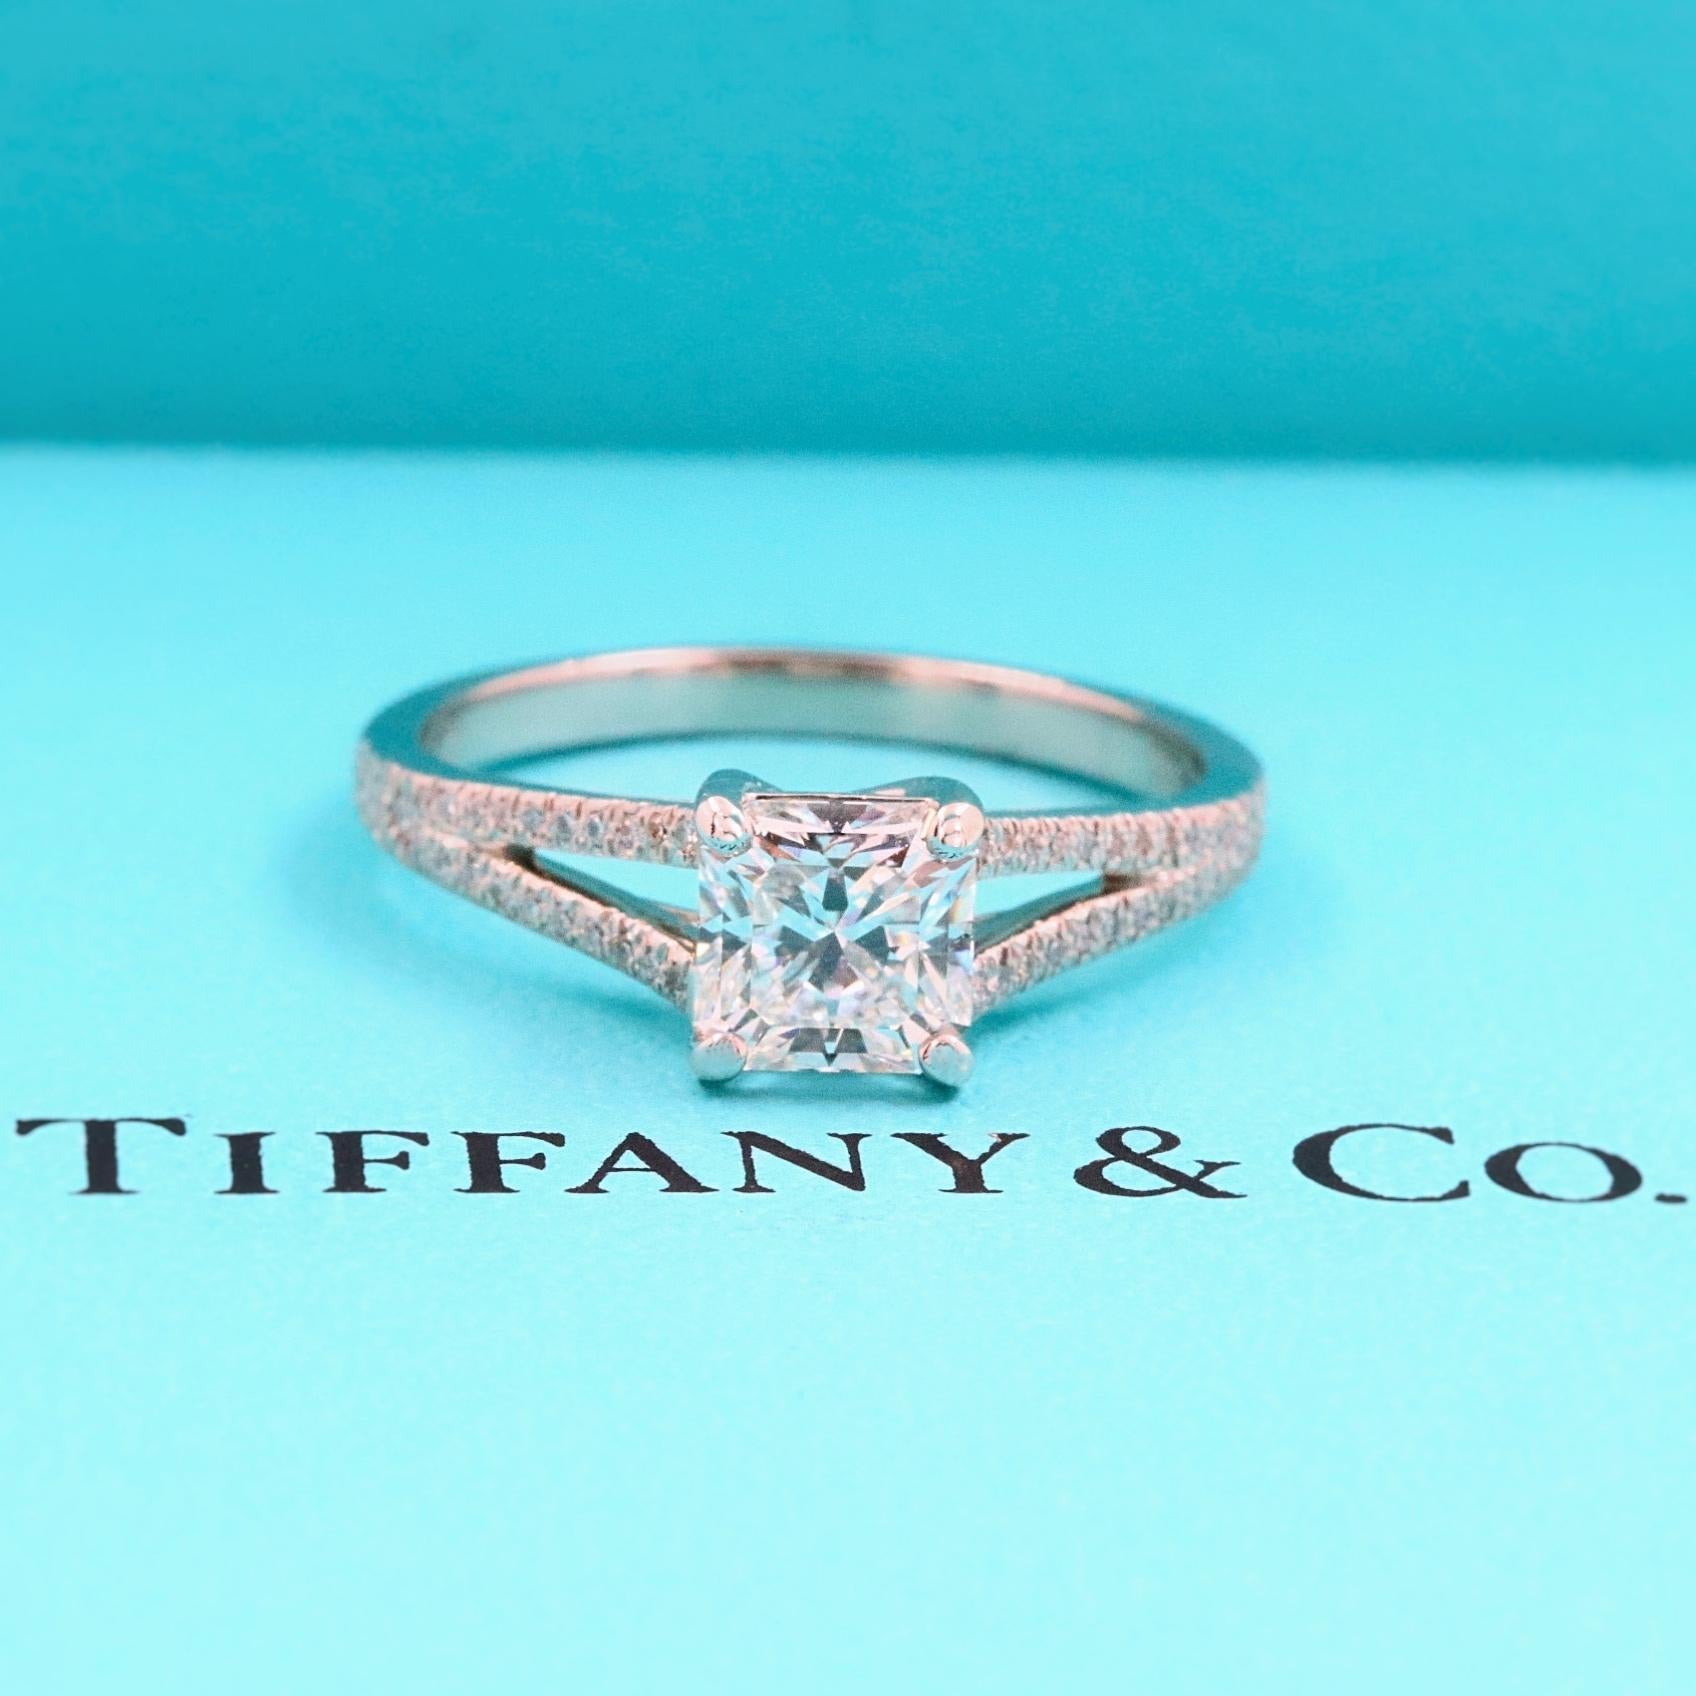 Tiffany & Co LUCIDA Diamond Engagement Ring

Style:  Lucida Split Shank Diamond Engagement Ring
Metal:  Platinum PT950
Size:  6 - sizable
Total Carat Weight:  1.04 tcw
Diamond Shape:  Lucida Cut
Diamond Color & Clarity:  F - VS2
Accent Diamonds:  48